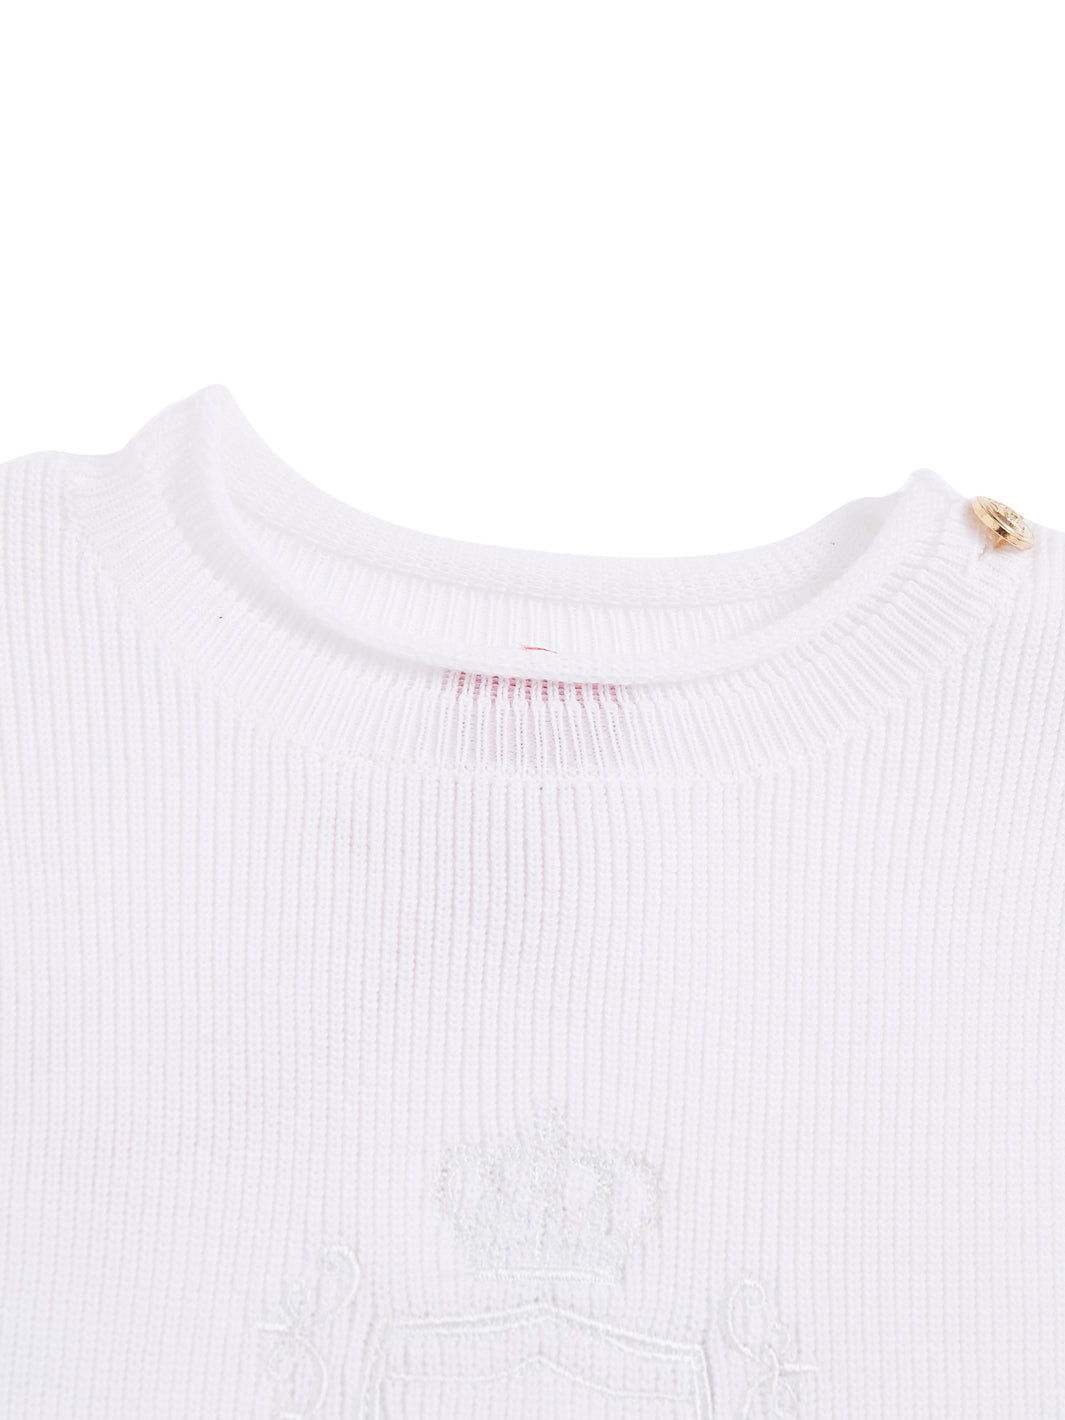 Emblem Long Sleeve Sweater